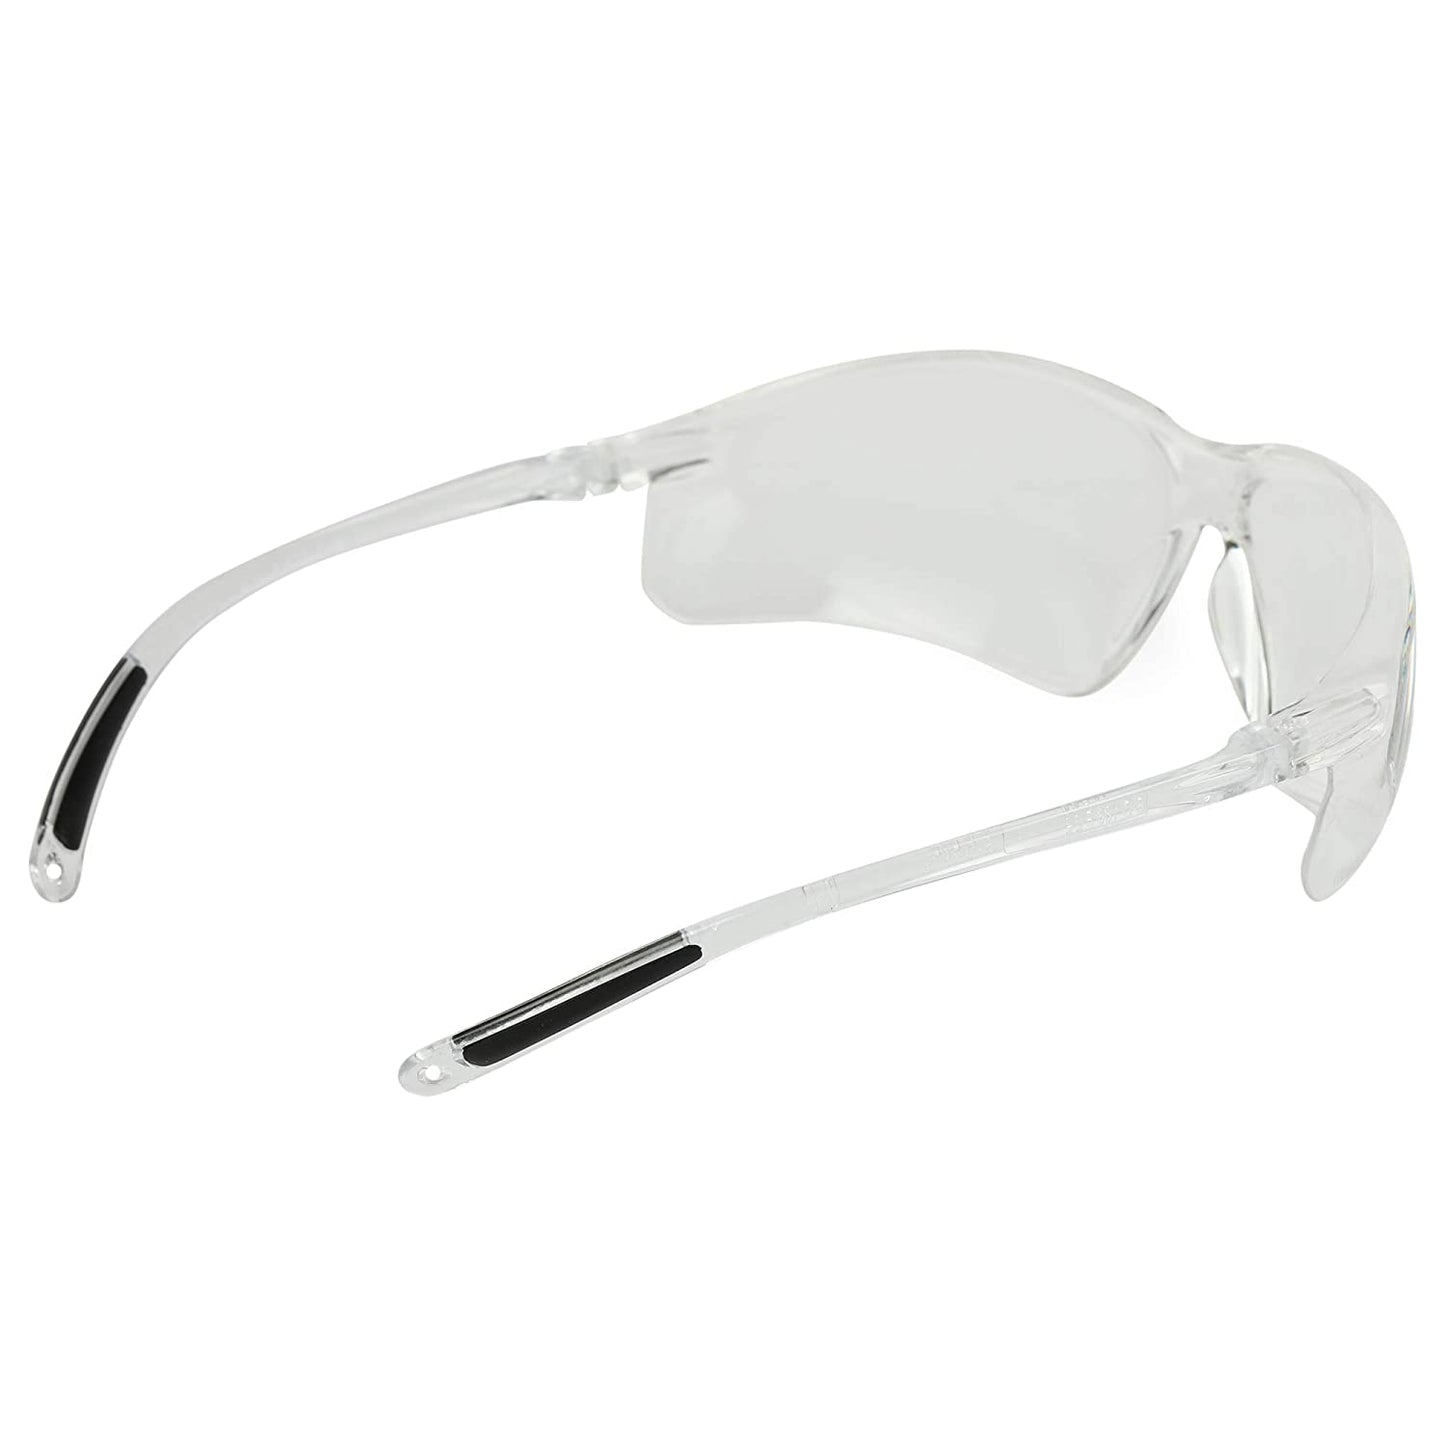 Honeywell A700 Protective Eyewear with Antifog, Polycarbonate, Clear - Hardcoat